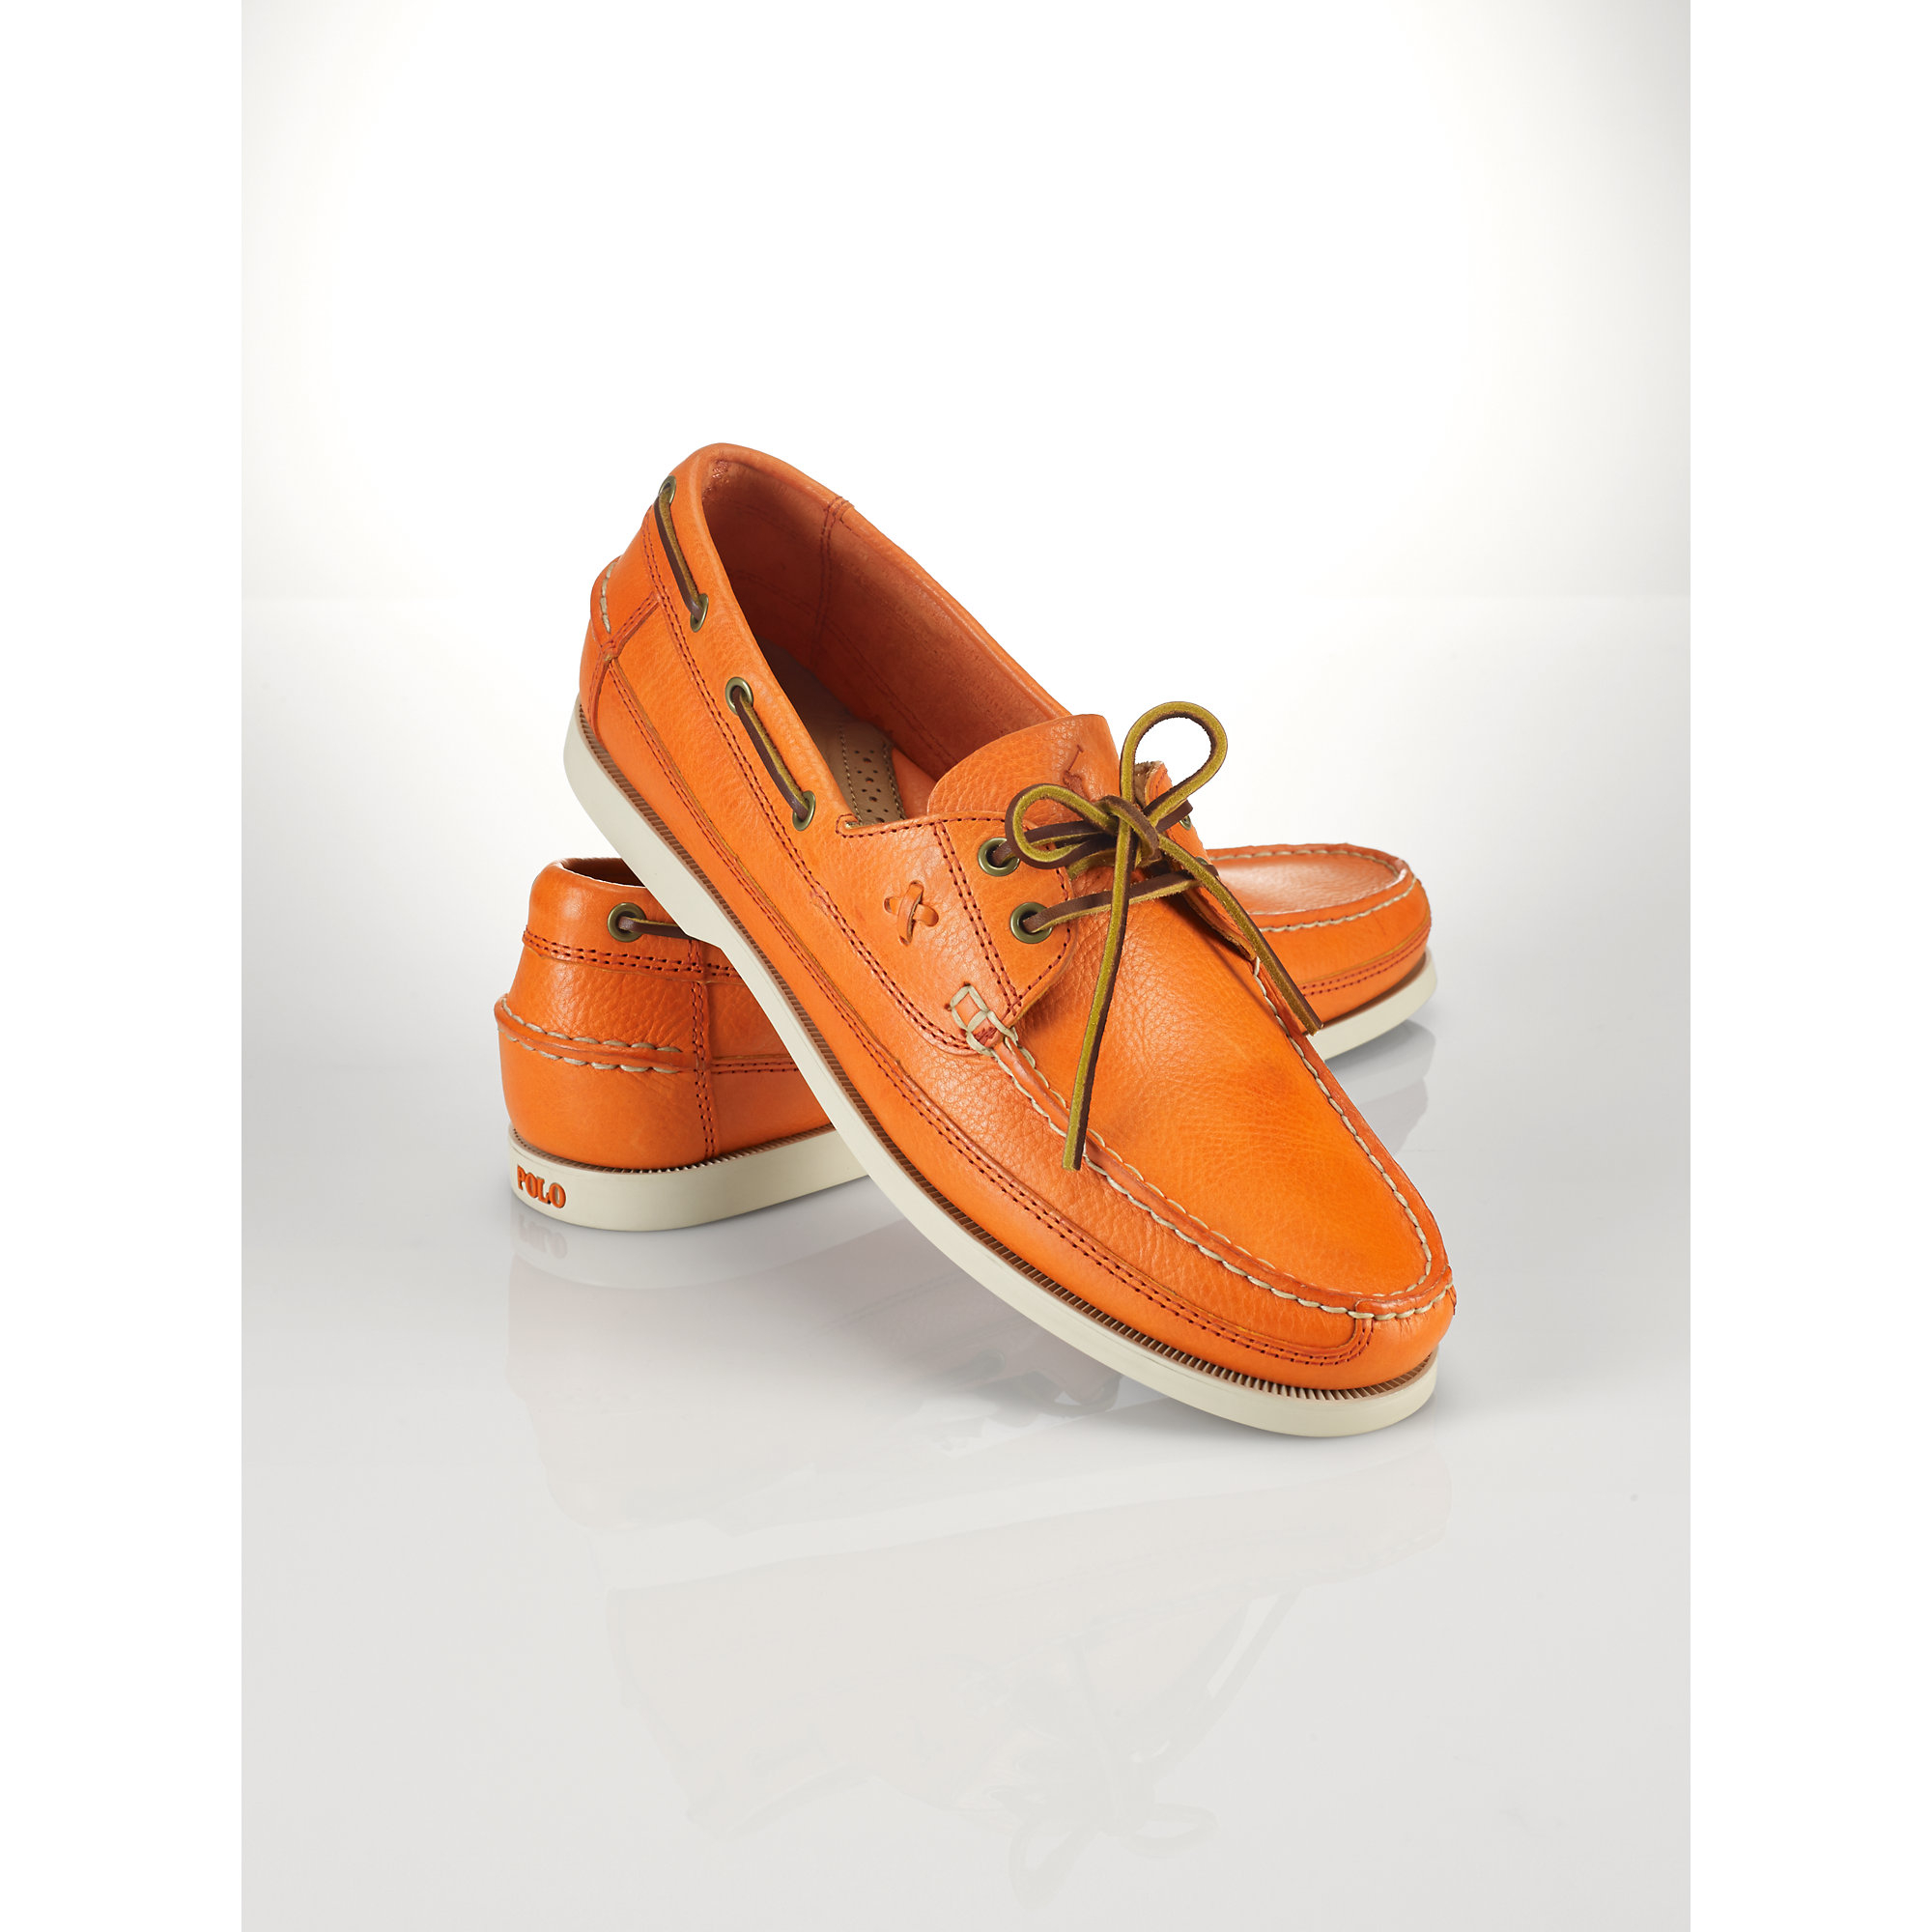 Polo Ralph Lauren Barnard Boat Shoe in Orange for Men - Lyst